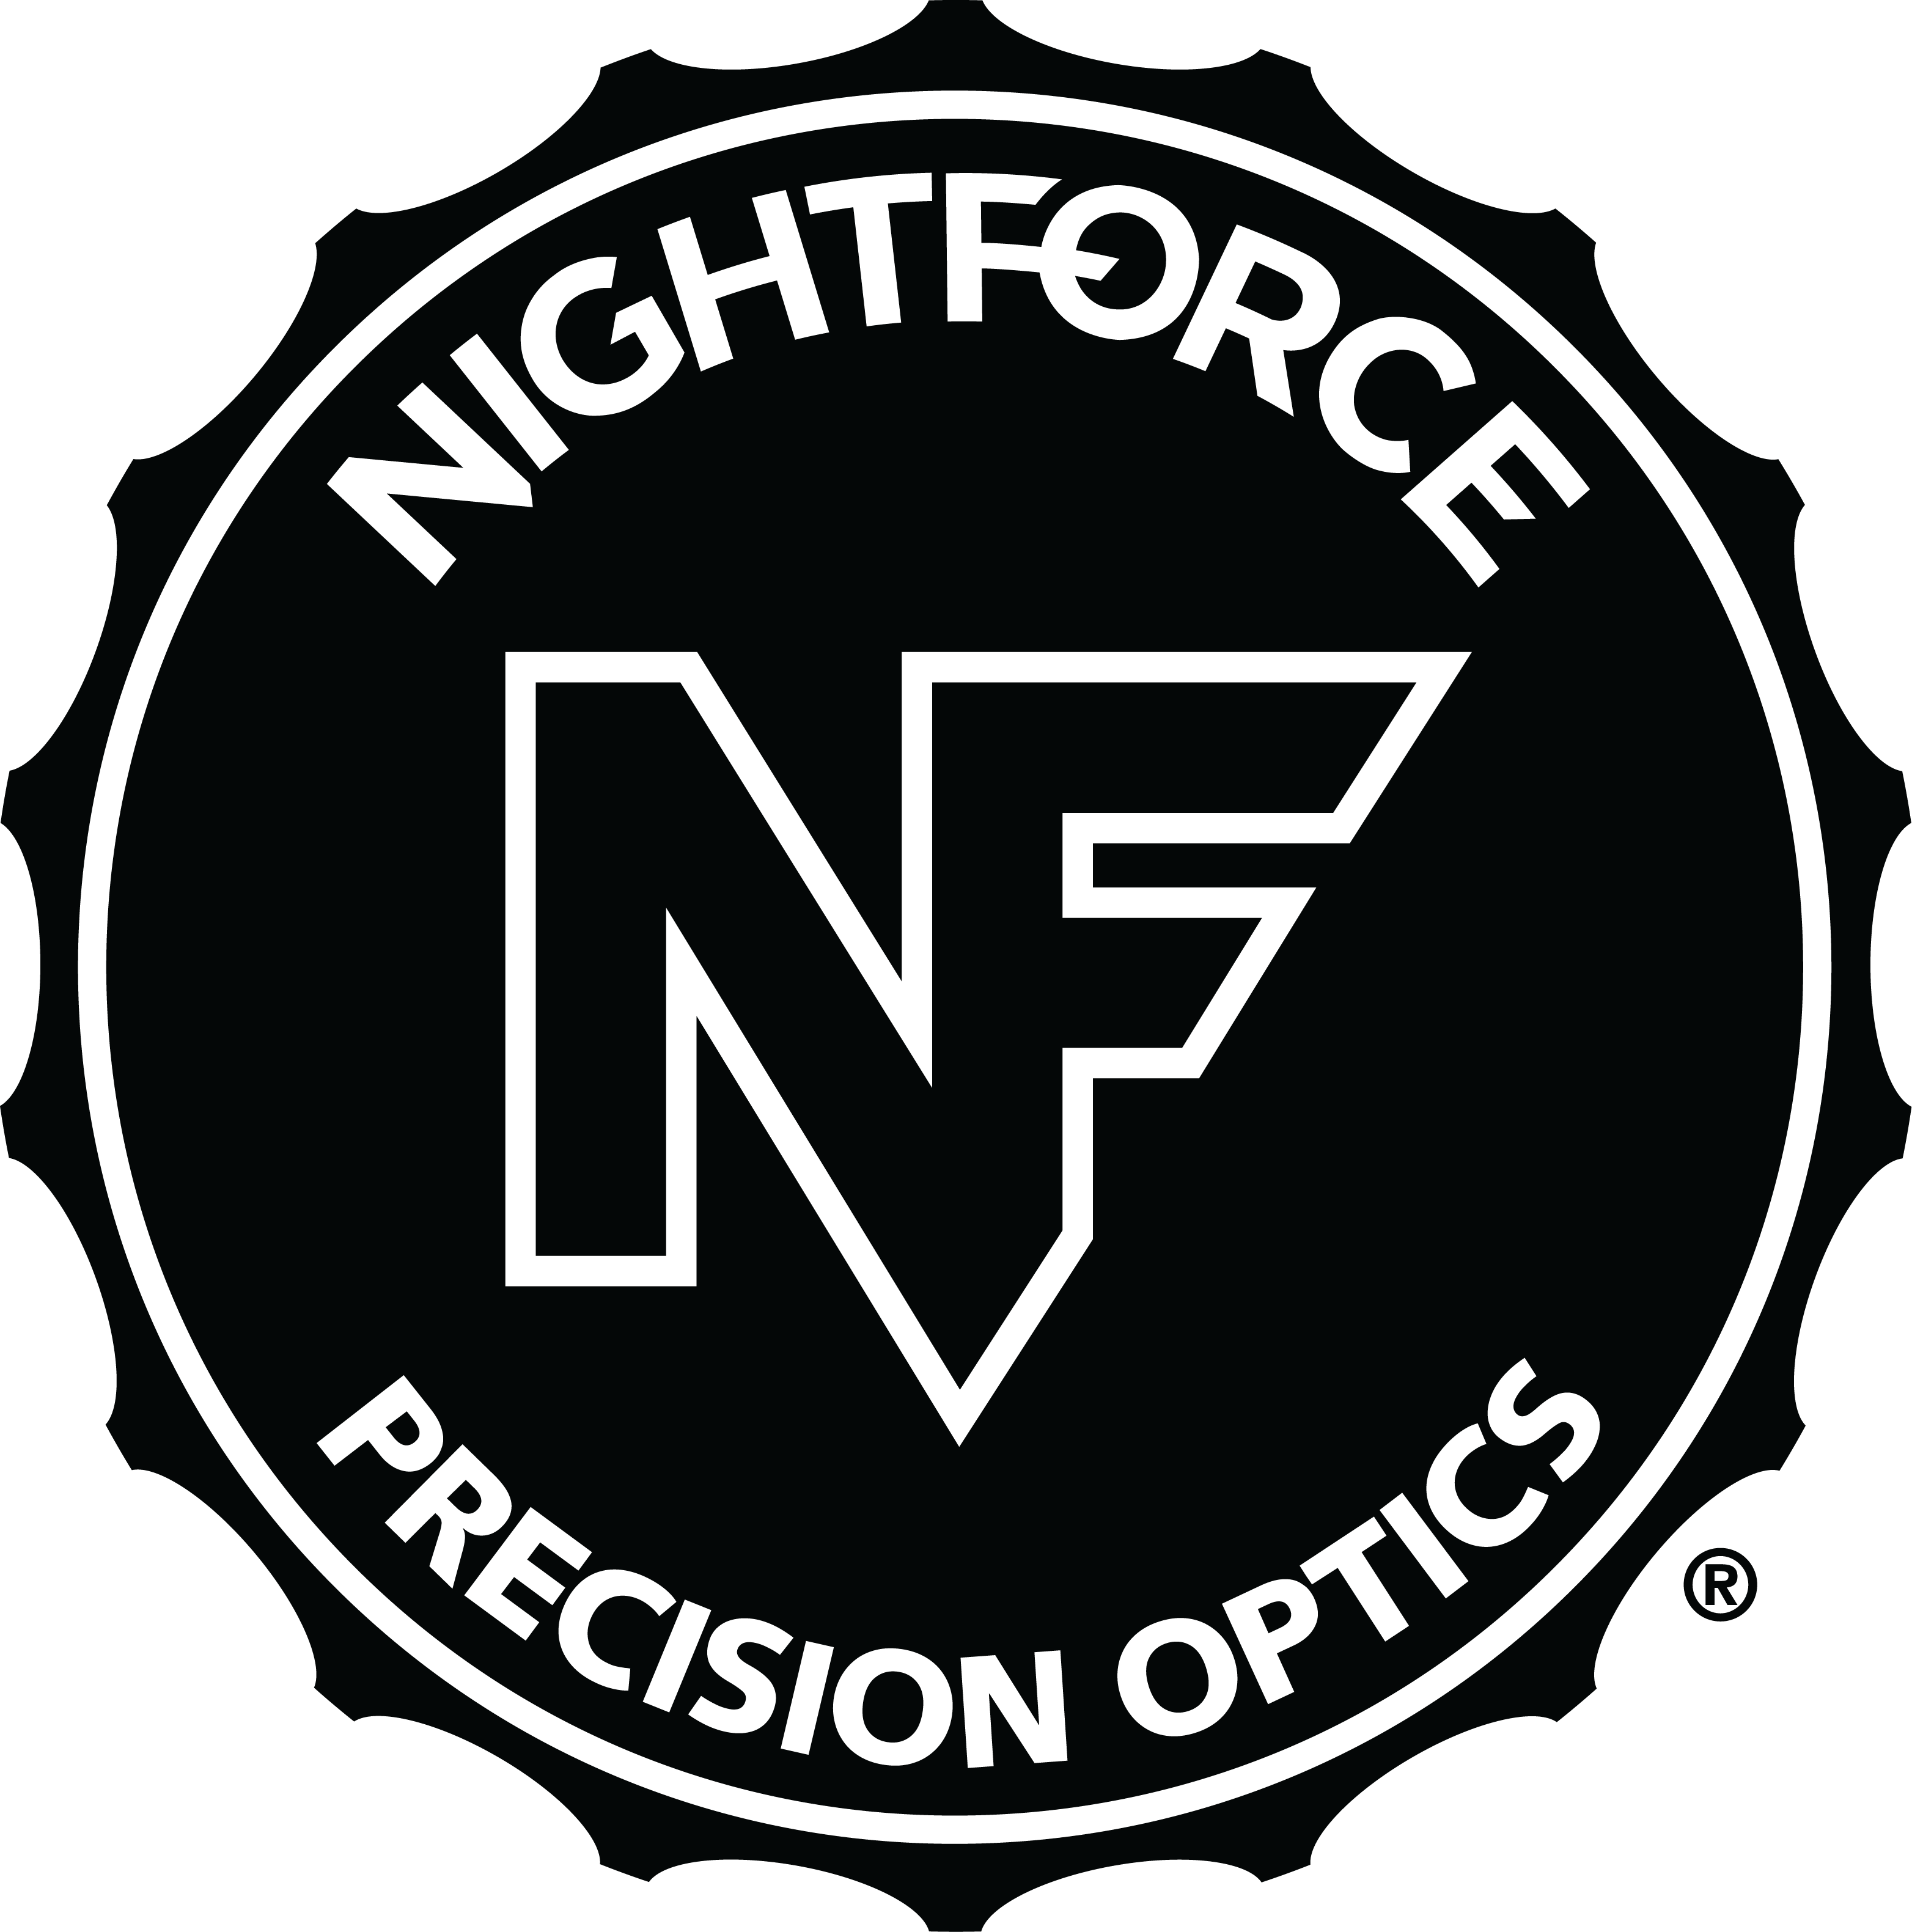 12" Nightforce Optics Sticker Decal Night Force Sights Riflescopes Spotting 